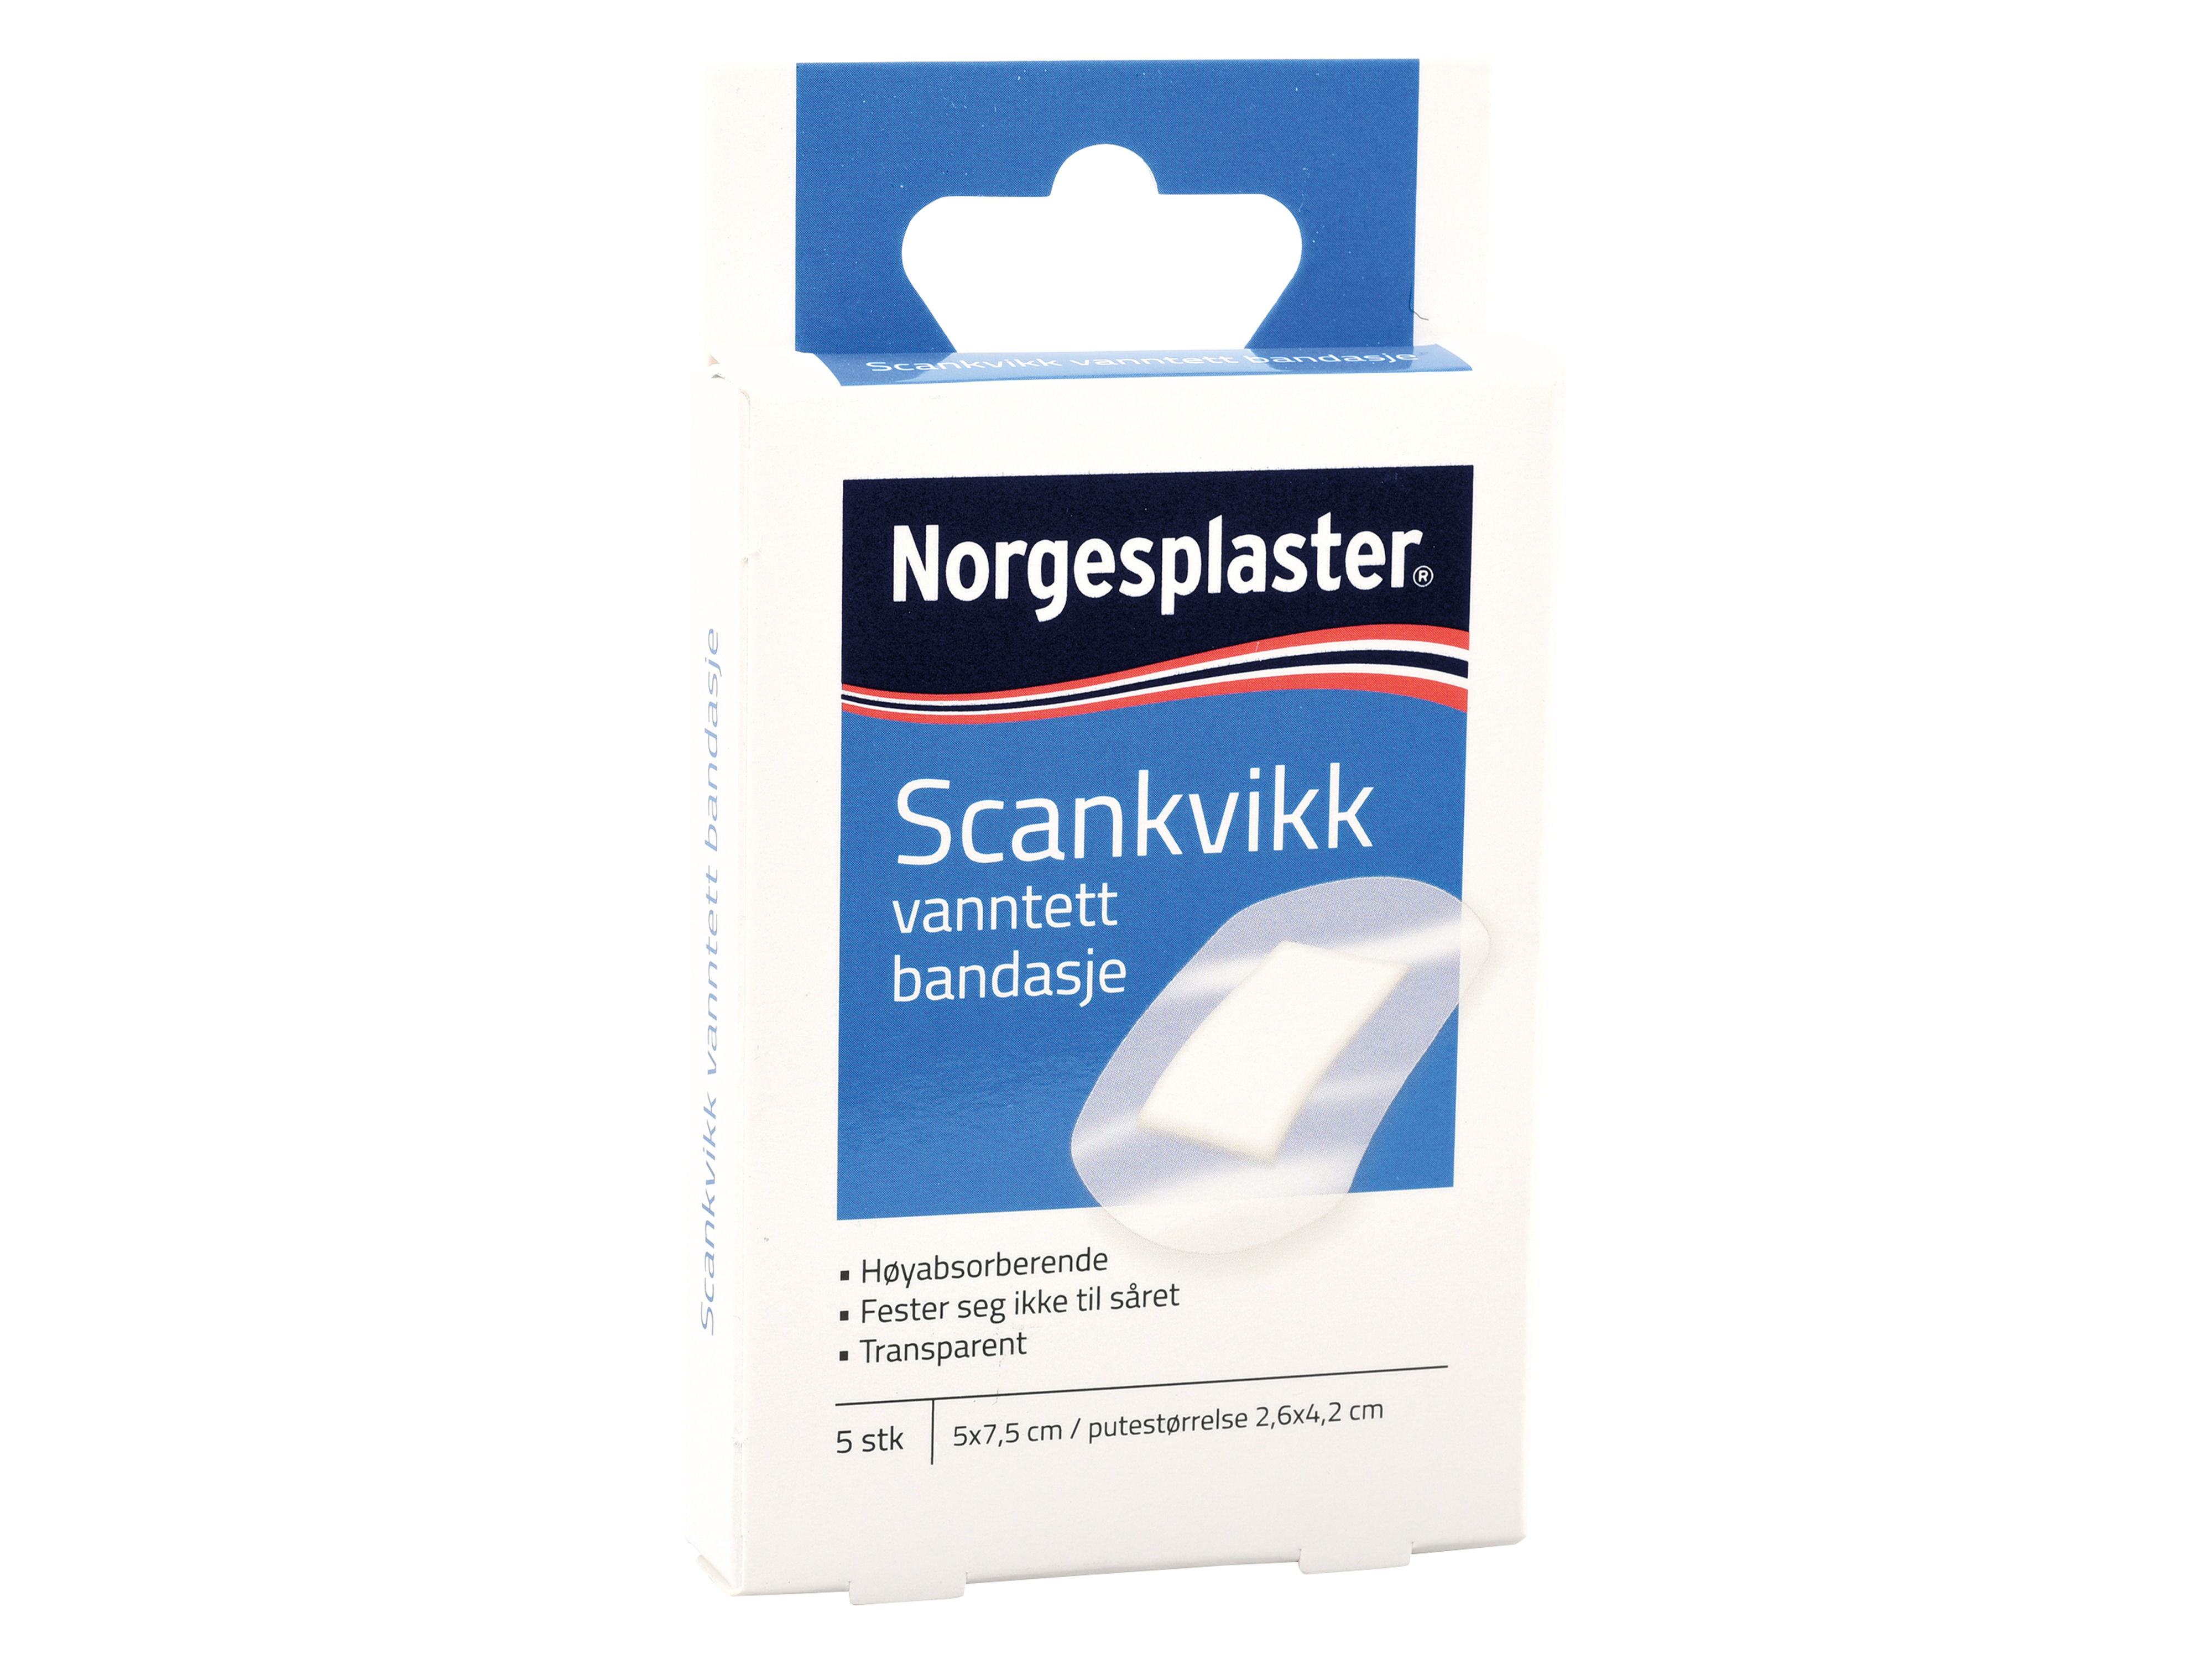 Norgesplaster Scankvikk vanntett bandasje, 5x7,5 cm, 5 stk.